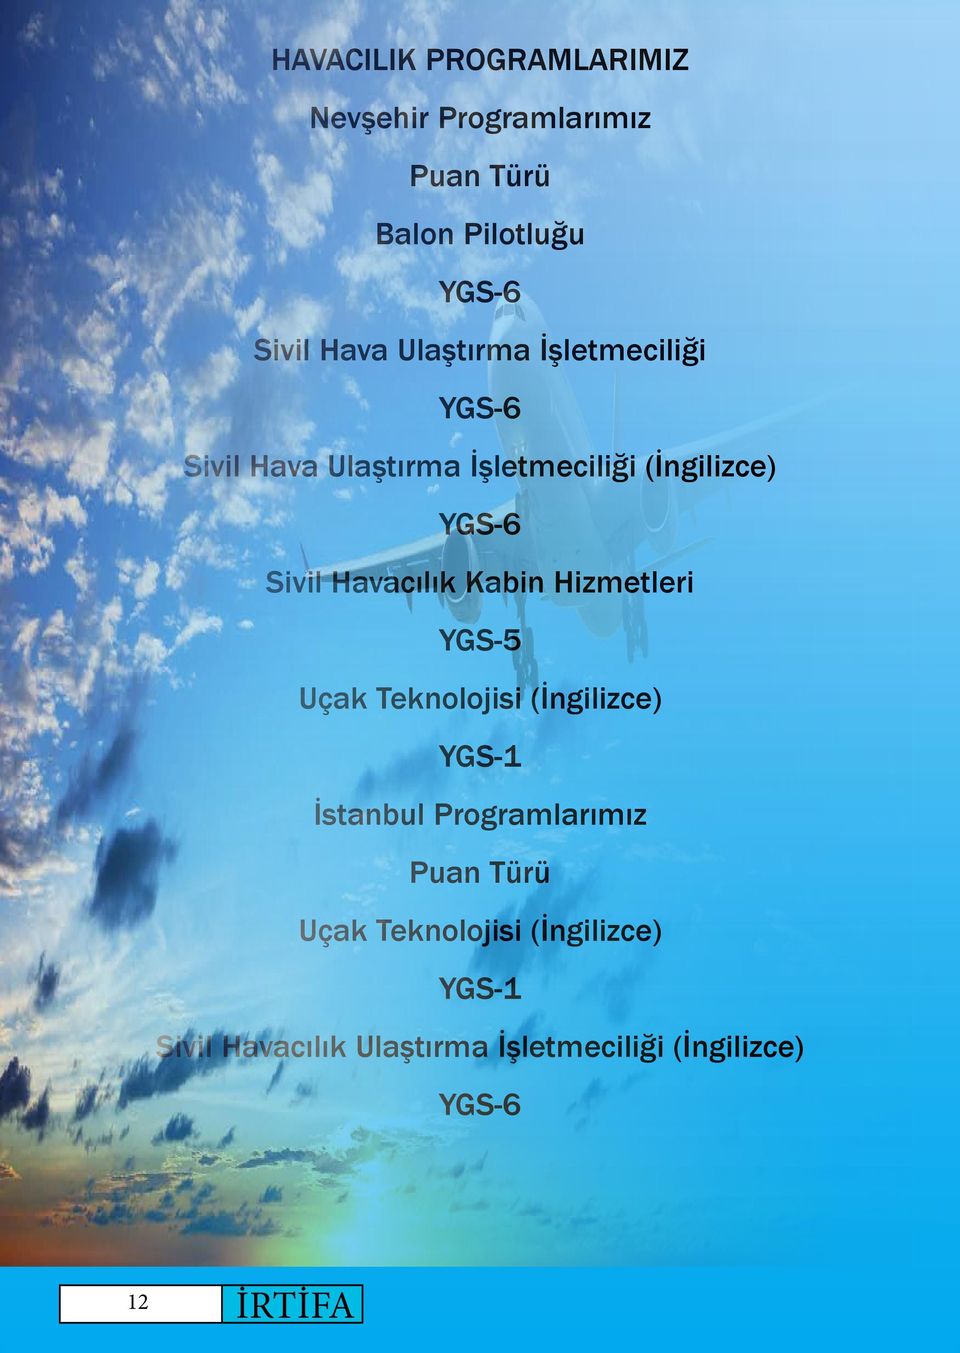 YGS-5 Uçak Teknolojisi (İngilizce) YGS-1 İstanbul Programlarımız Puan Türü Uçak Teknolojisi (İngilizce)